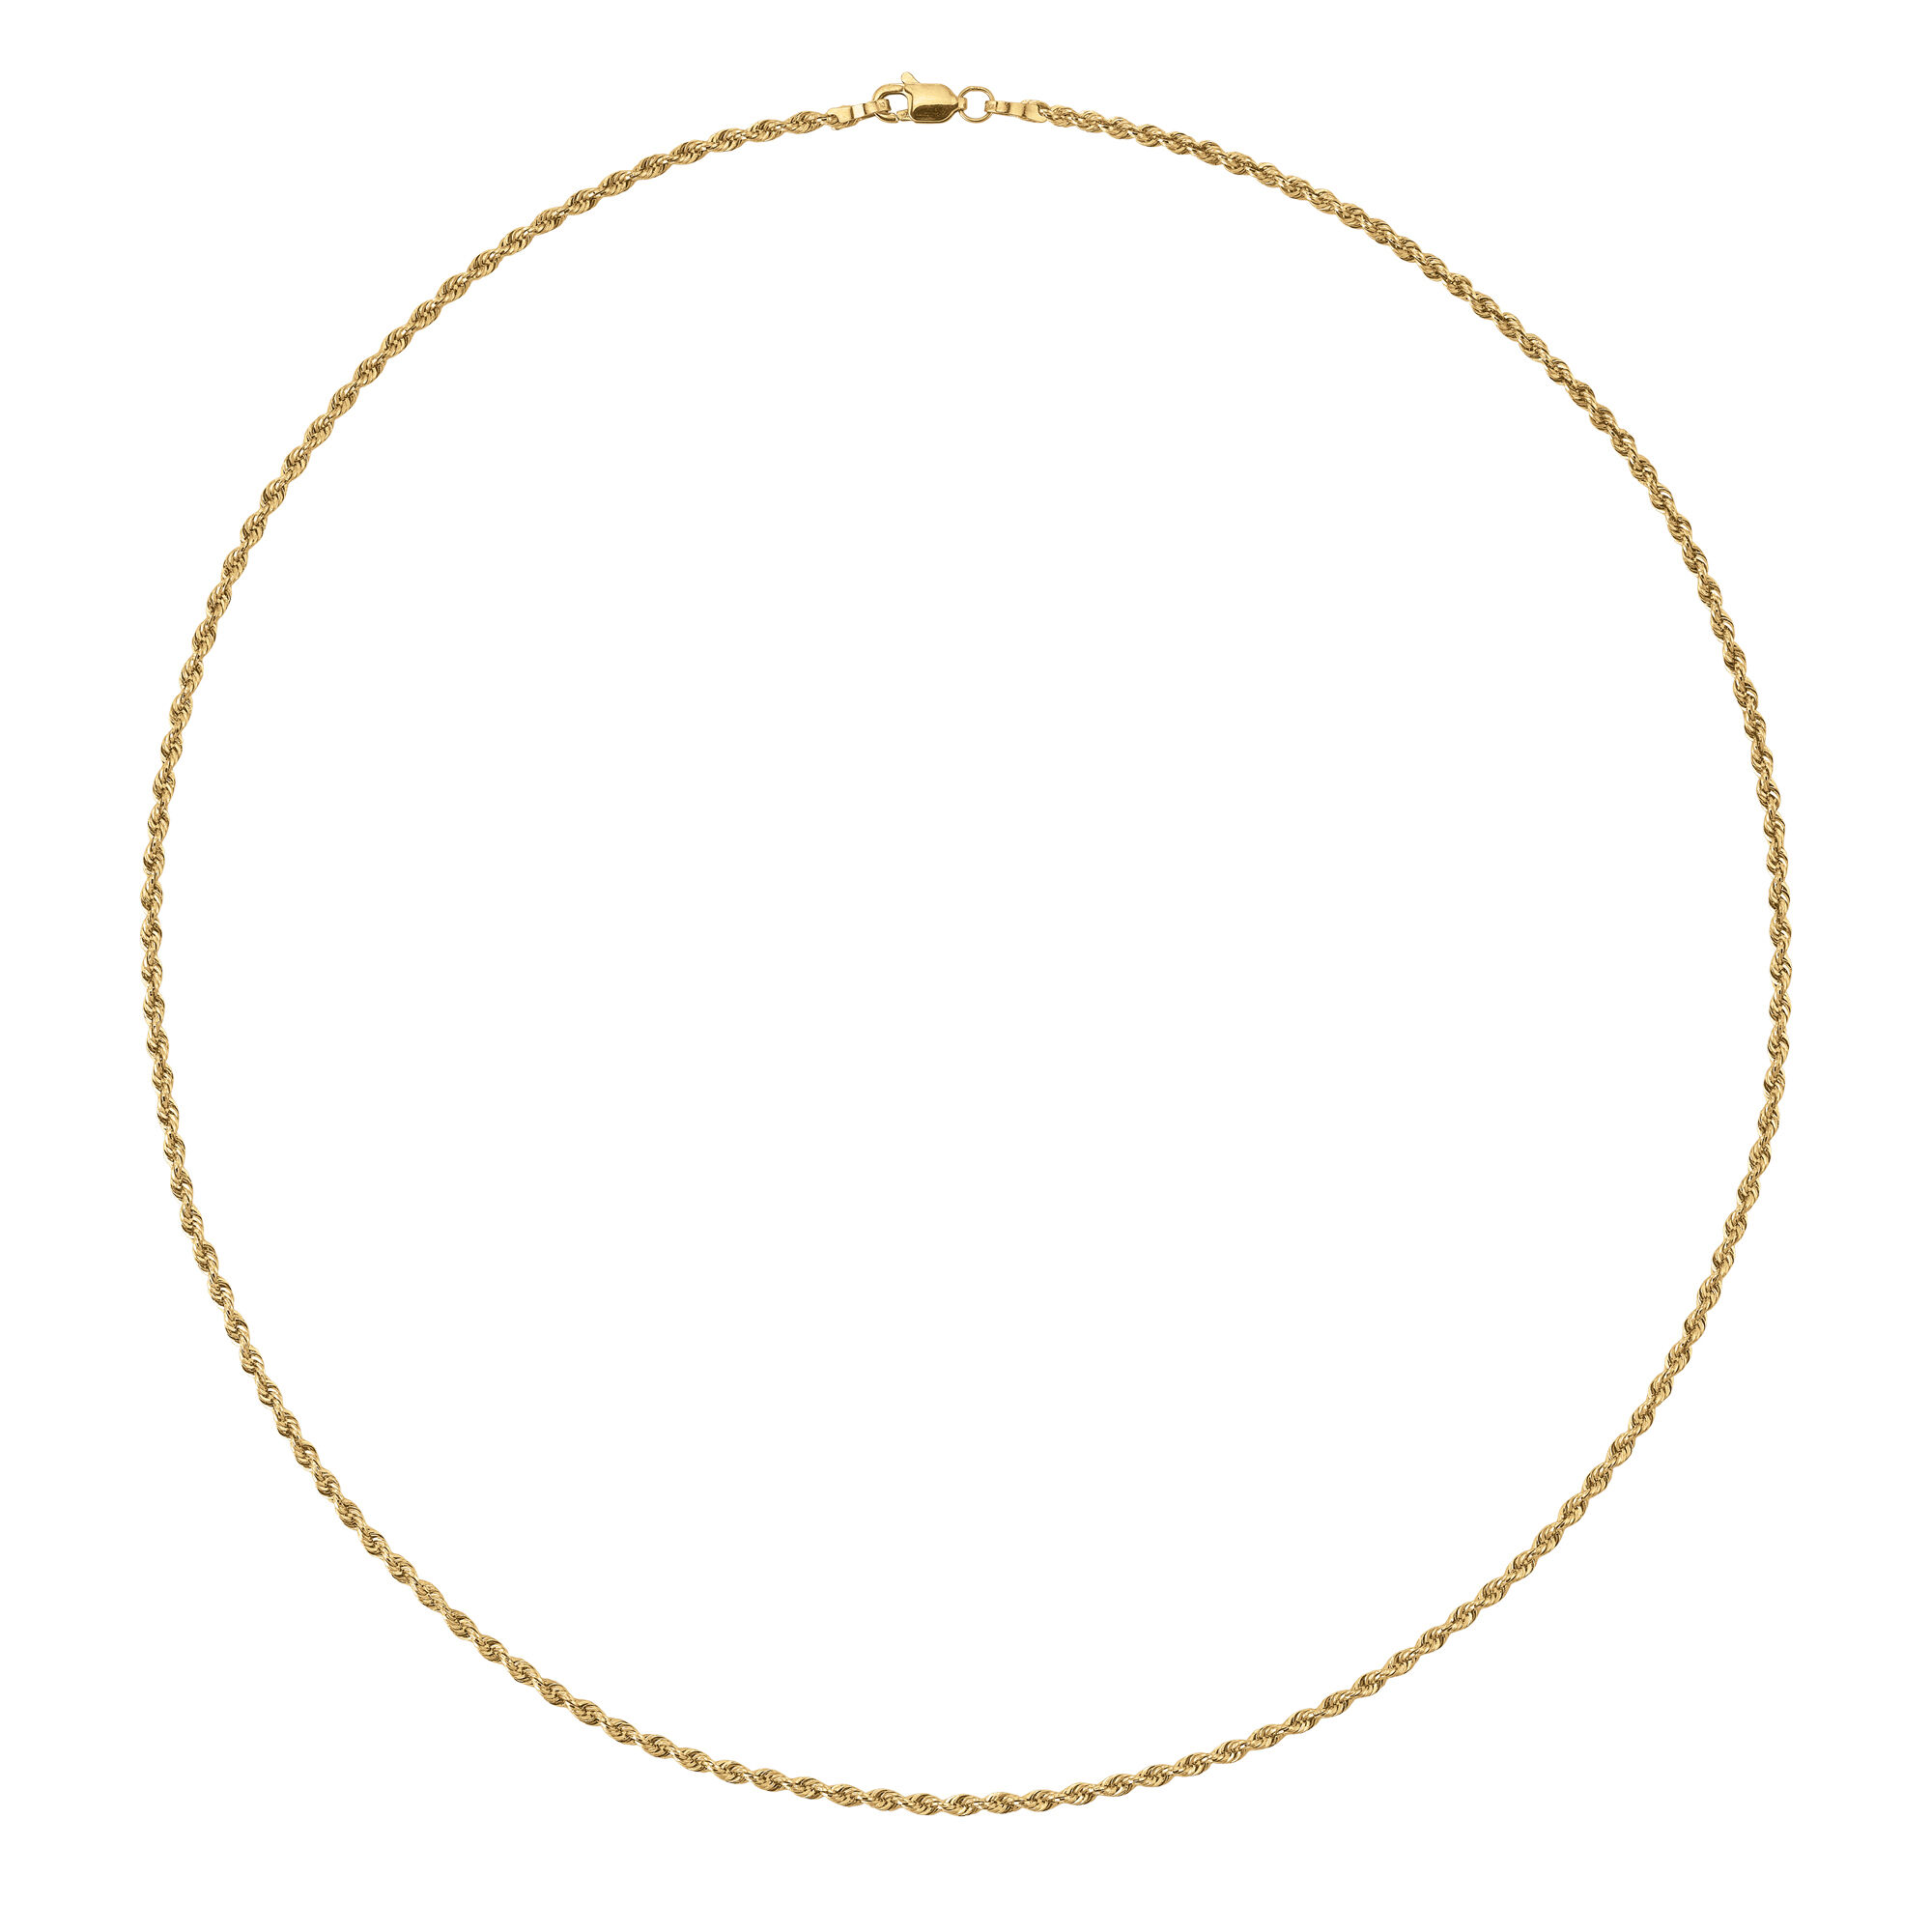 Elegant Simplicity 10kt Gold Necklace 10789 0014 b pendant